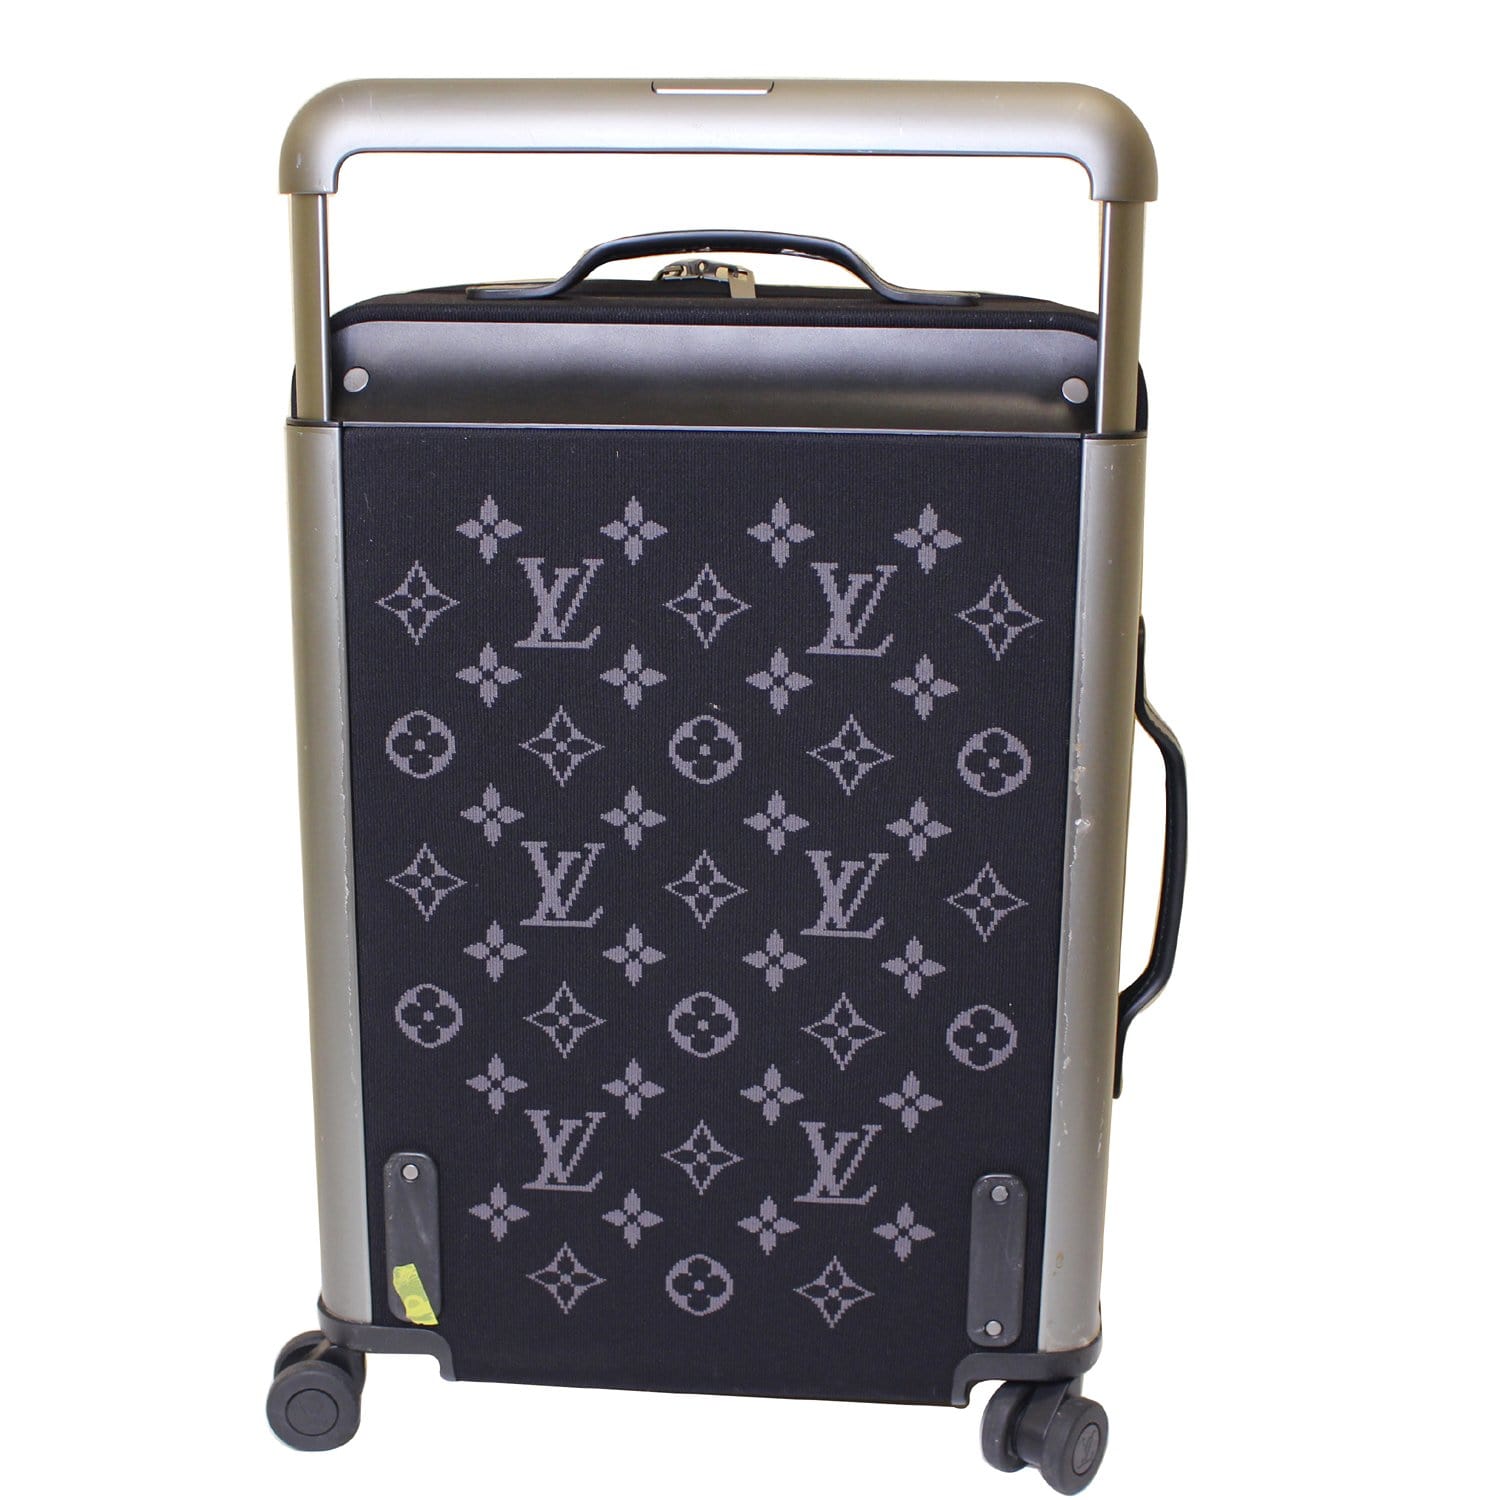 Louis Vuitton Monogram Zephyr Hard Case Luggage Bag 55 Brown